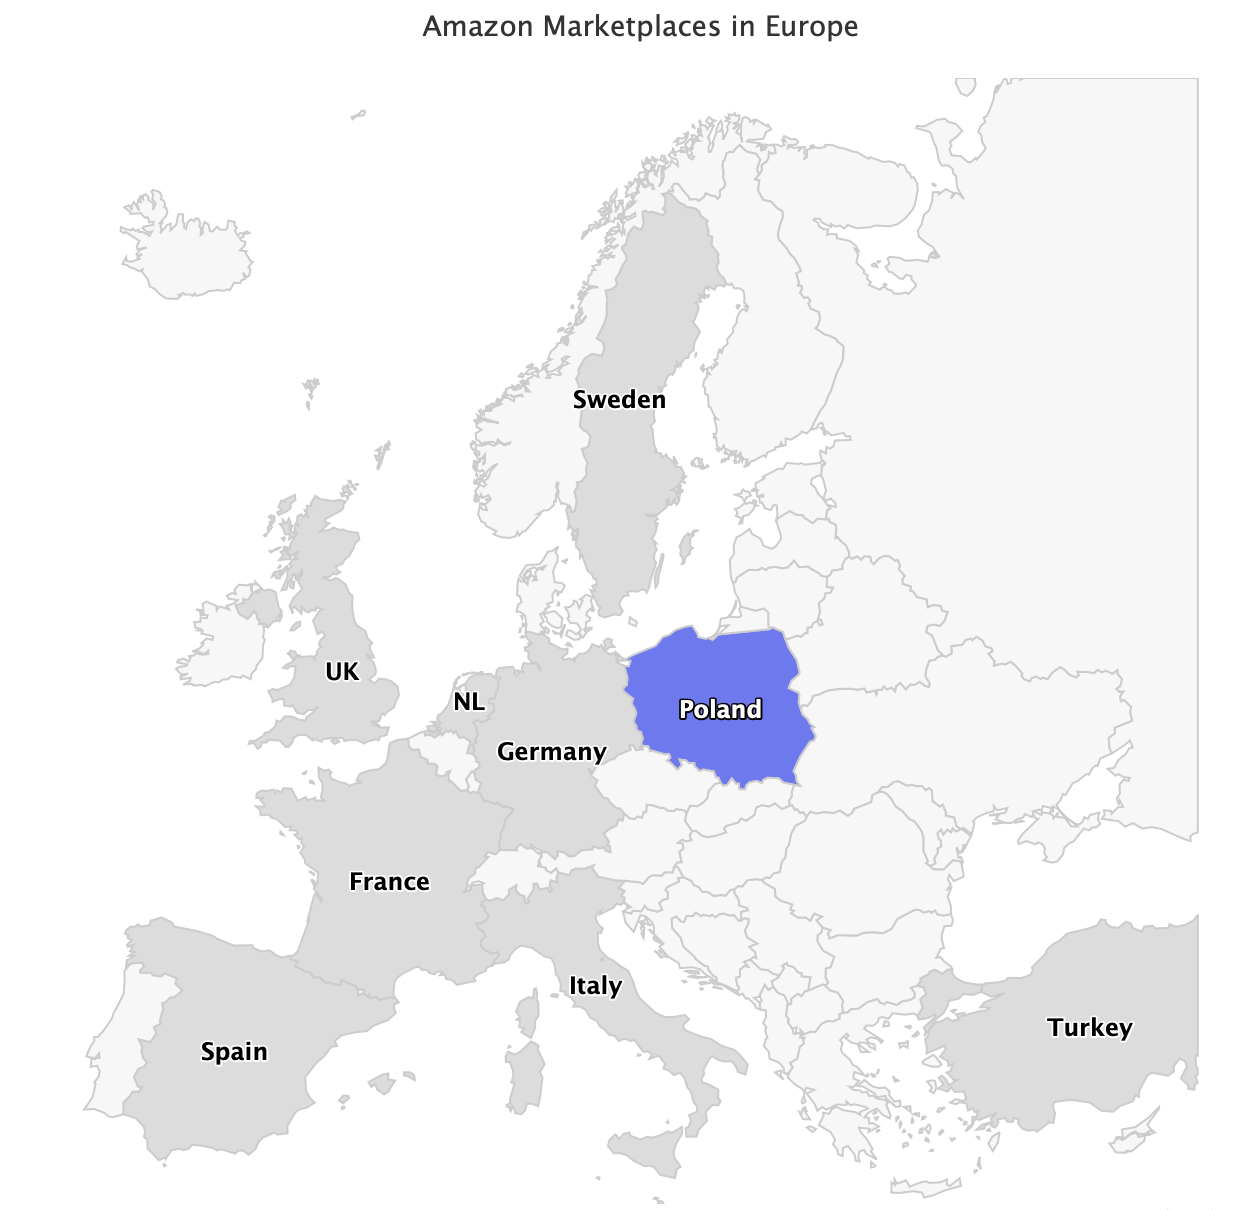 Amazon Marketplaces in Europe